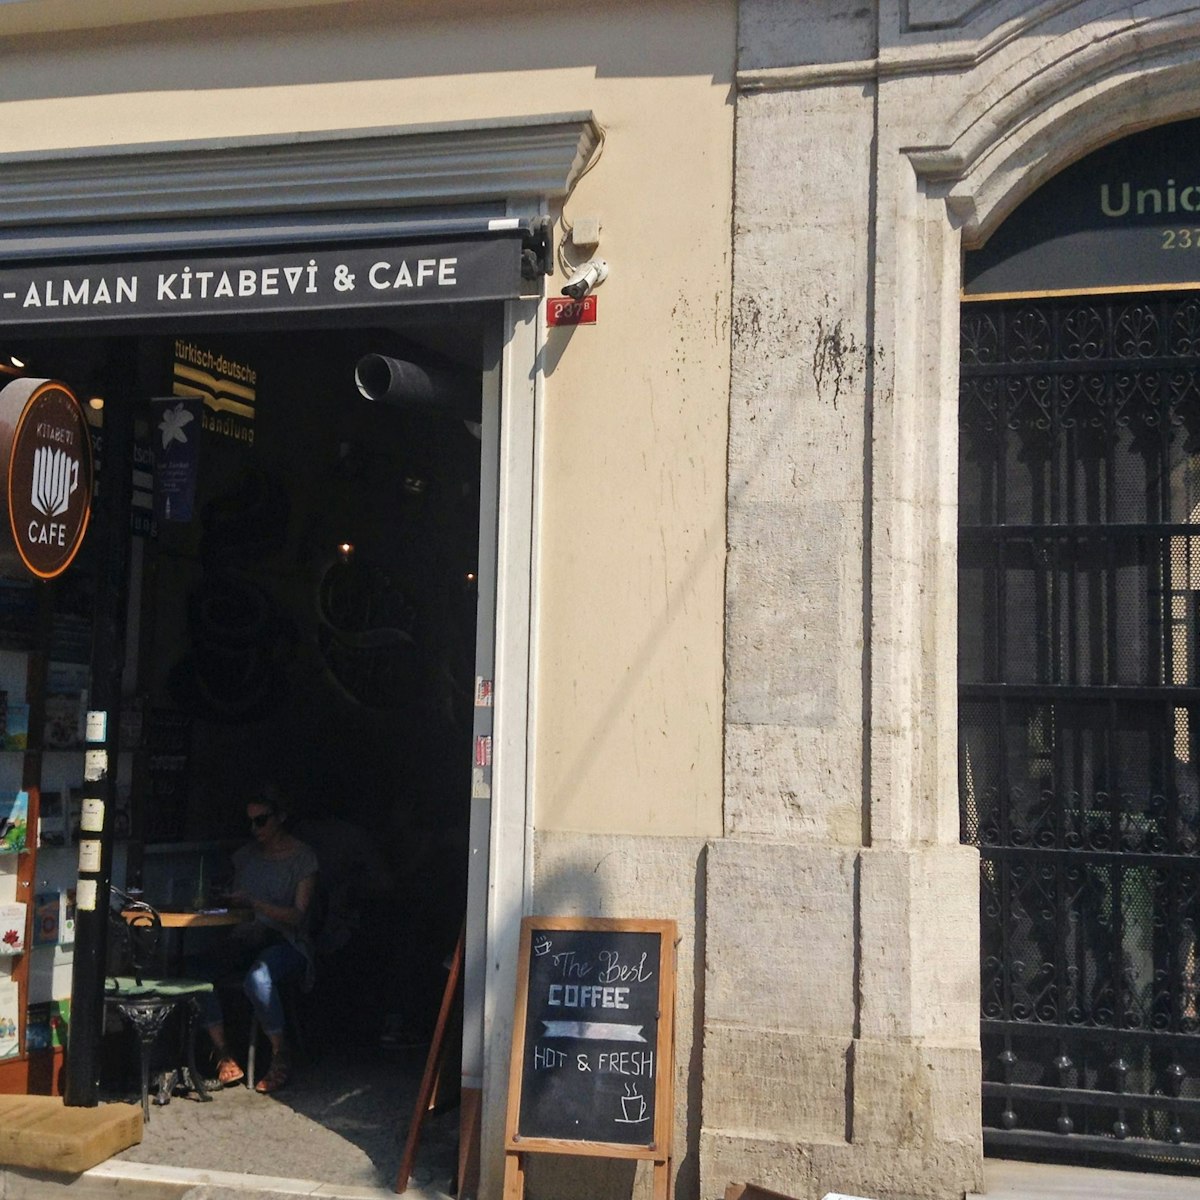 Türk-Alman Kitabevi & Cafe shopfront